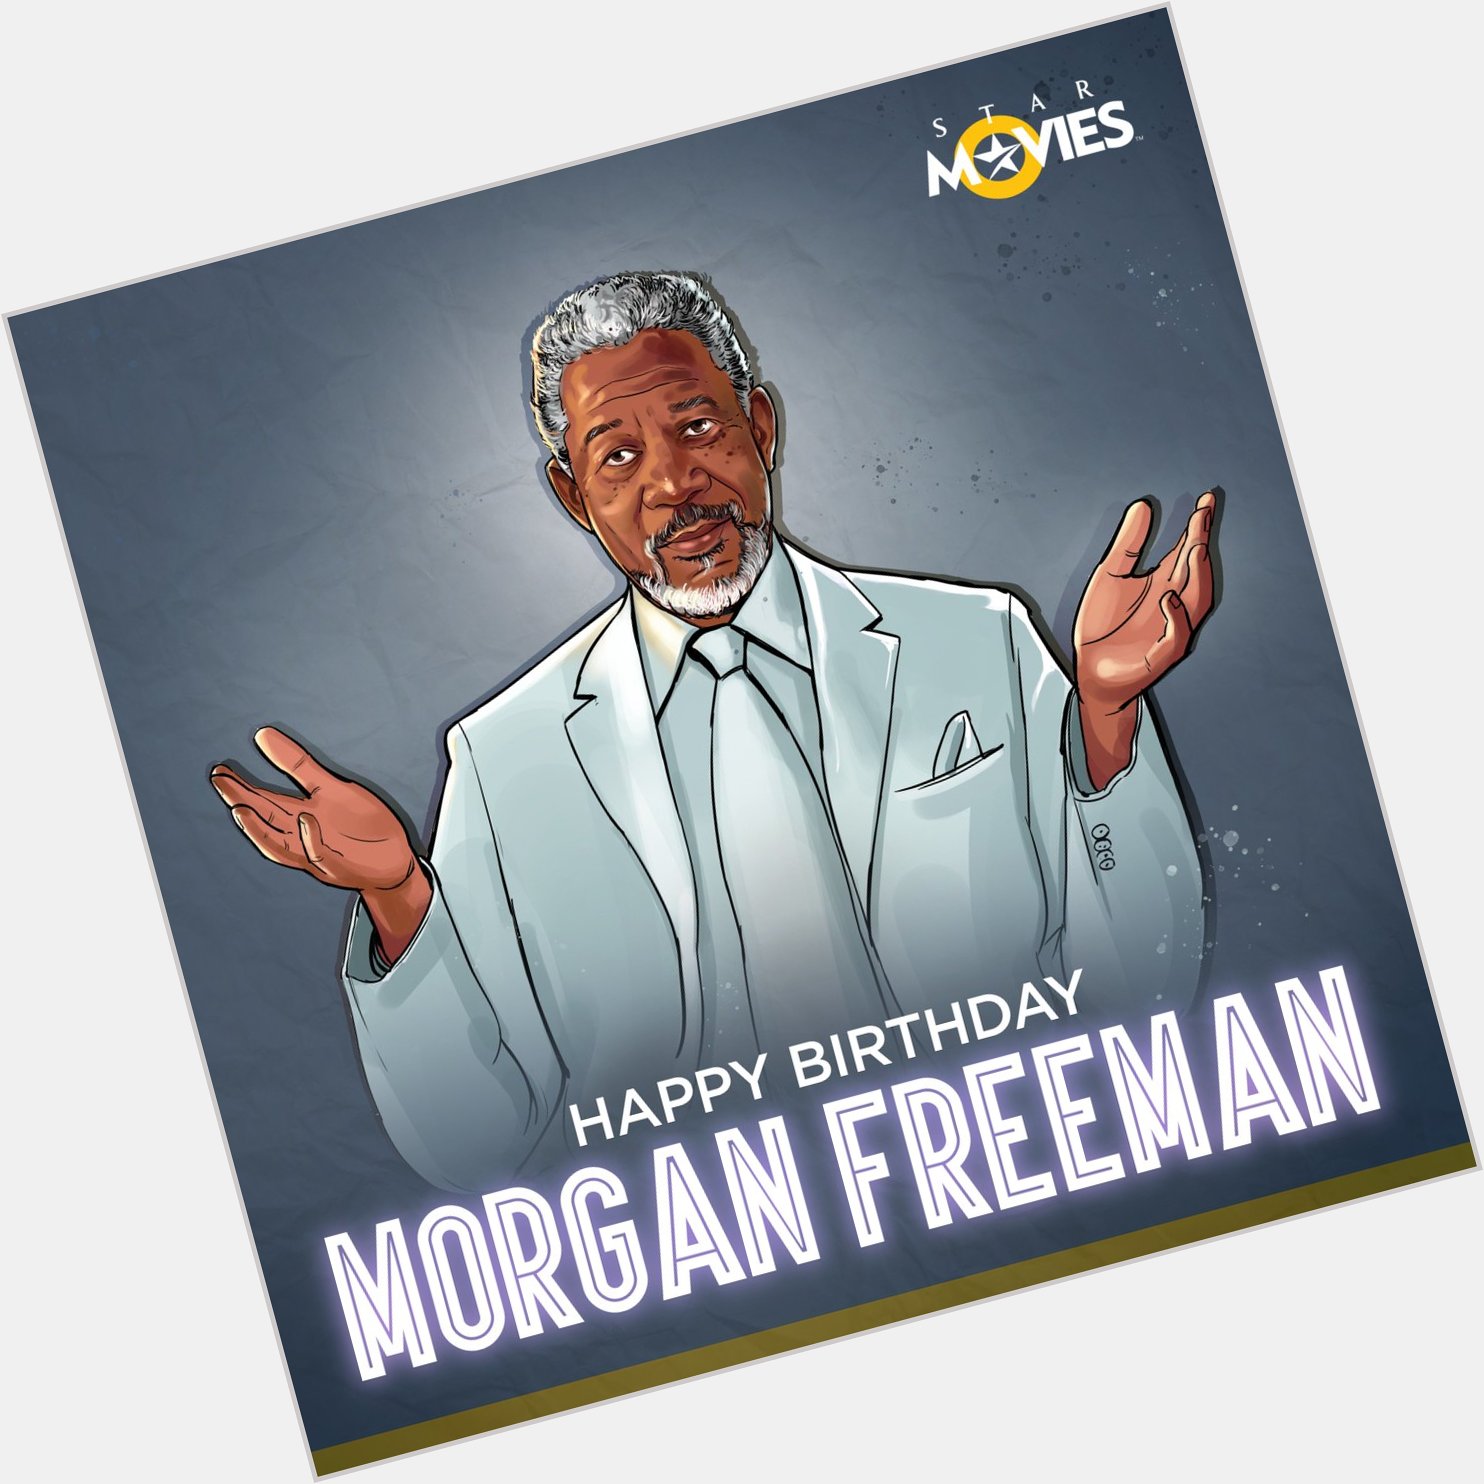 Happy Birthday to the iconic actor Morgan Freeman! 